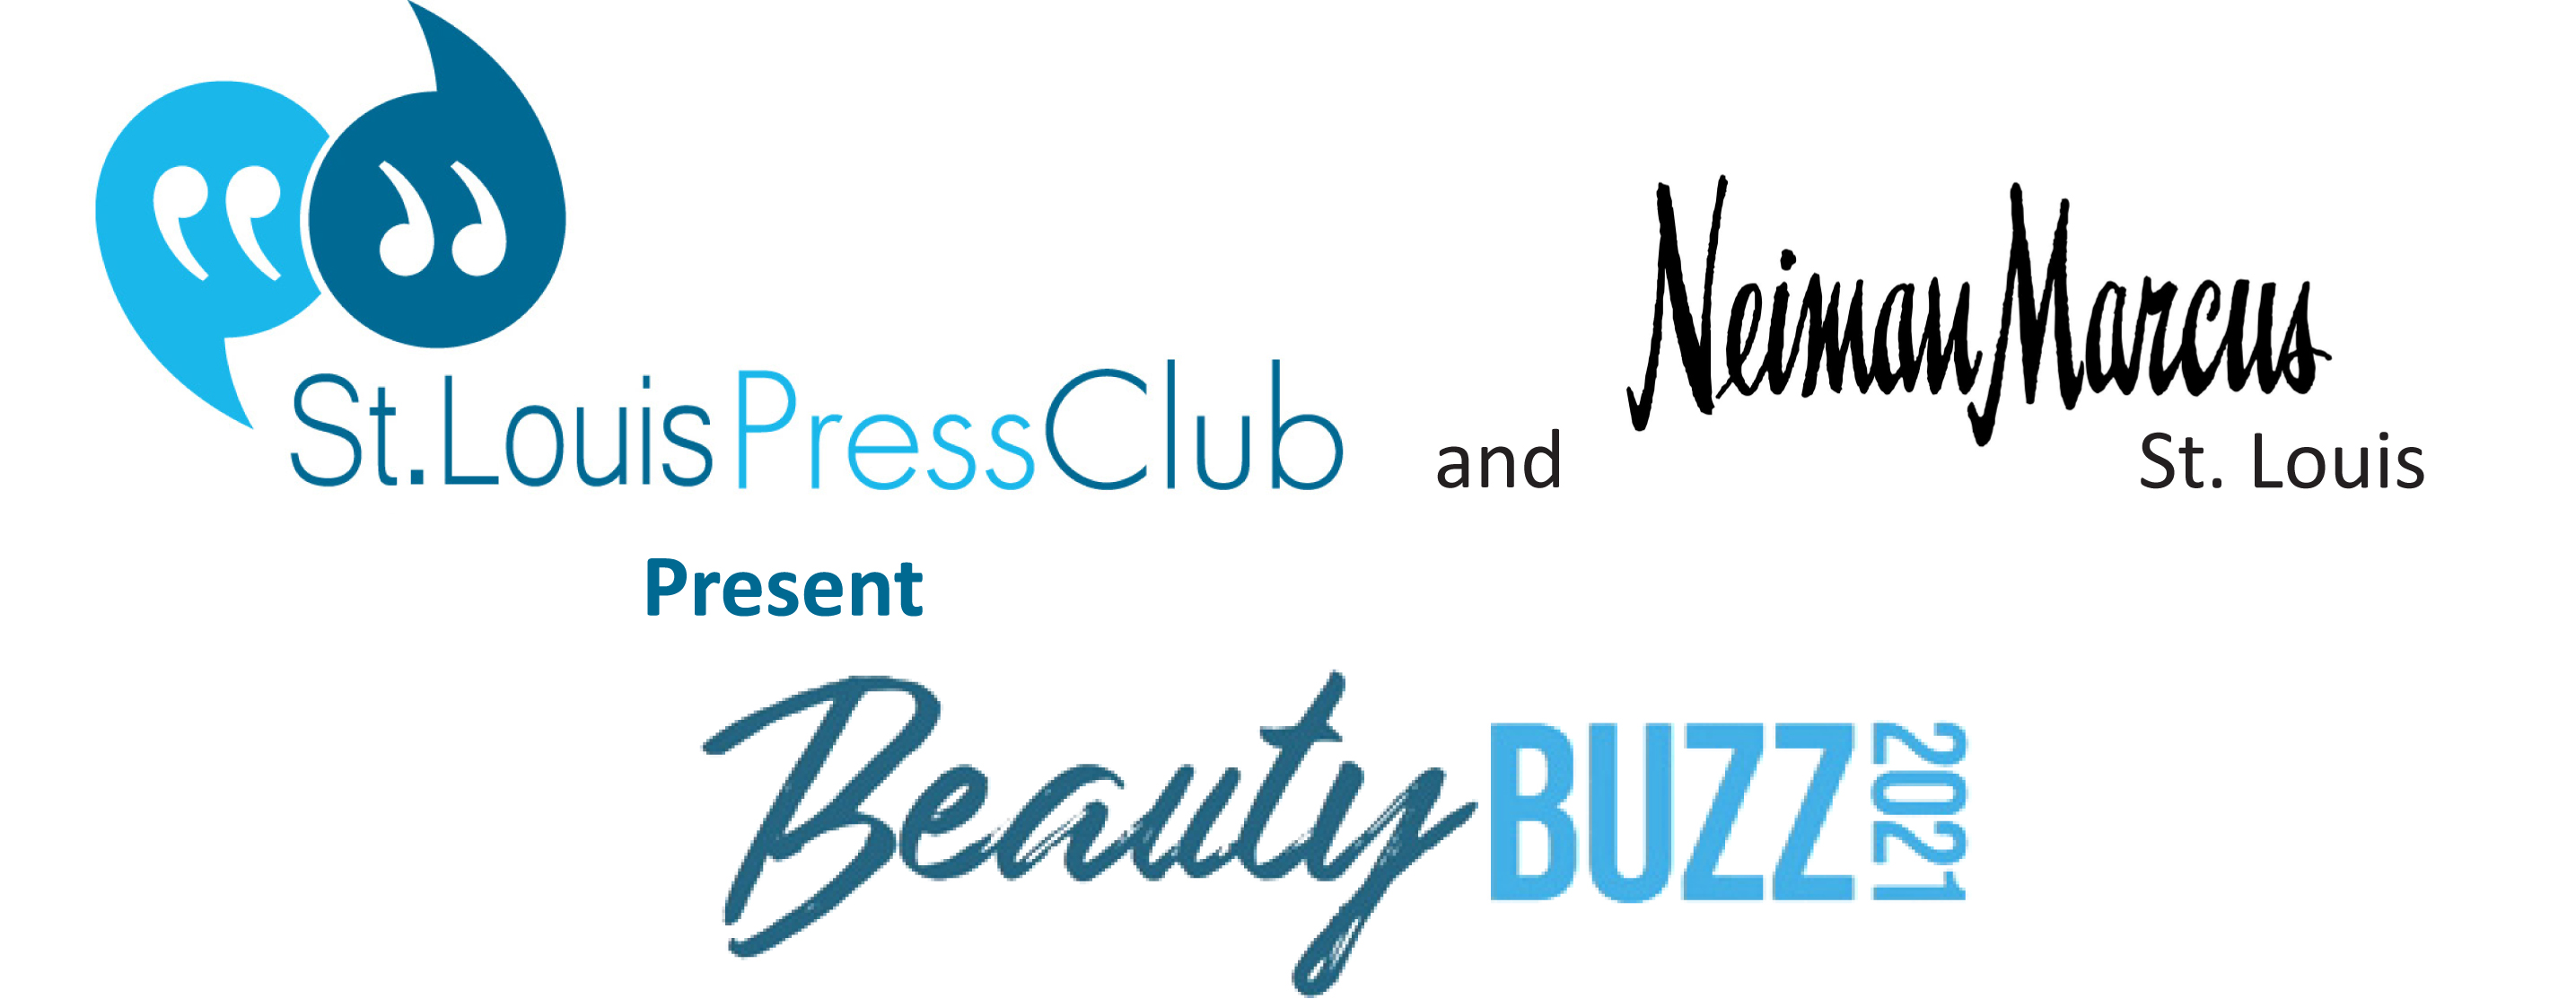 St. Louis Press Club + Neiman Marcus Beauty Buzz — Sophisticated